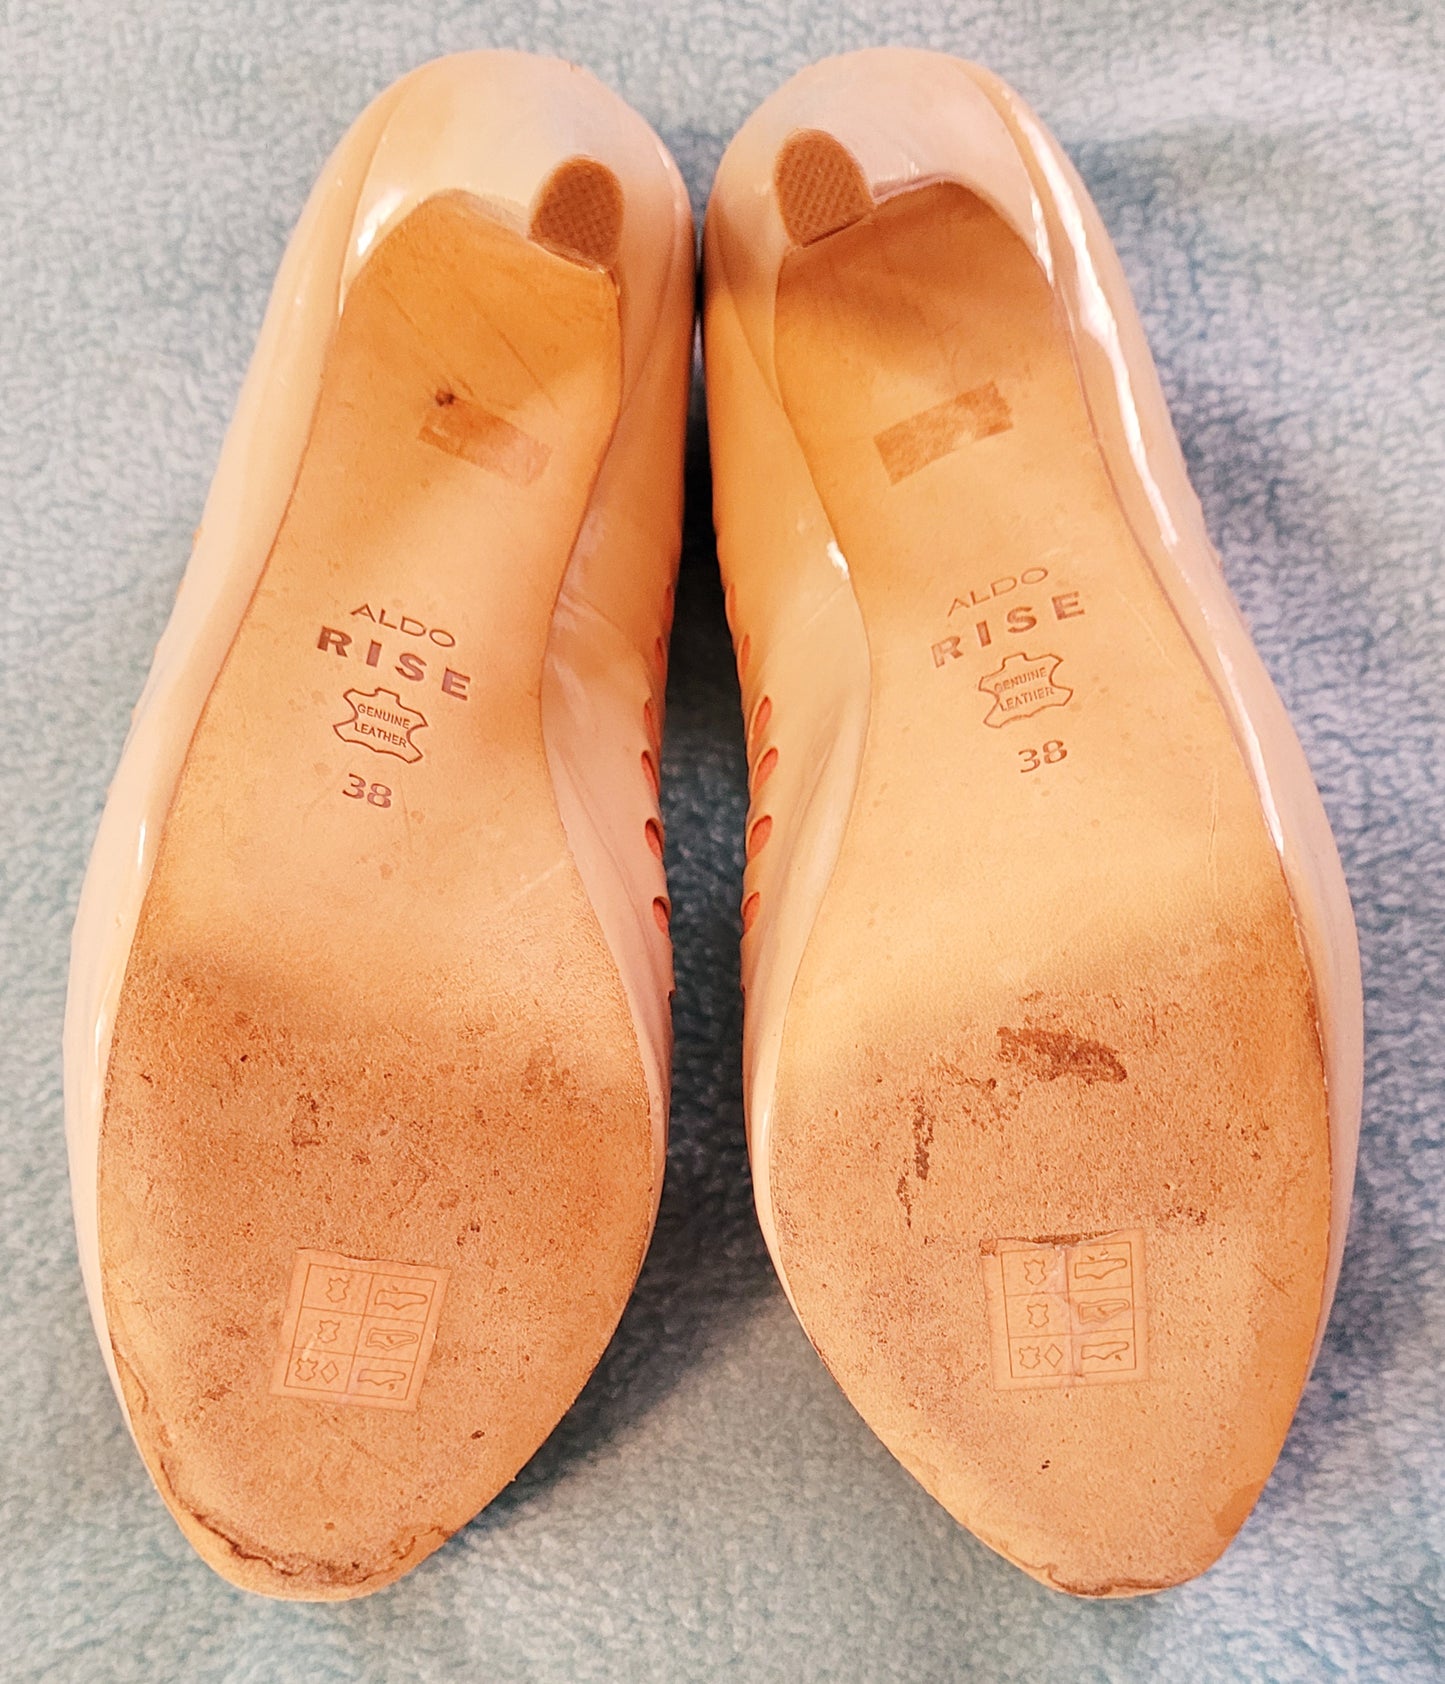 ALDO RISE 4.5" Heel Pump Ladies *Beige/Pink Shoe (Size: 38/7.5)